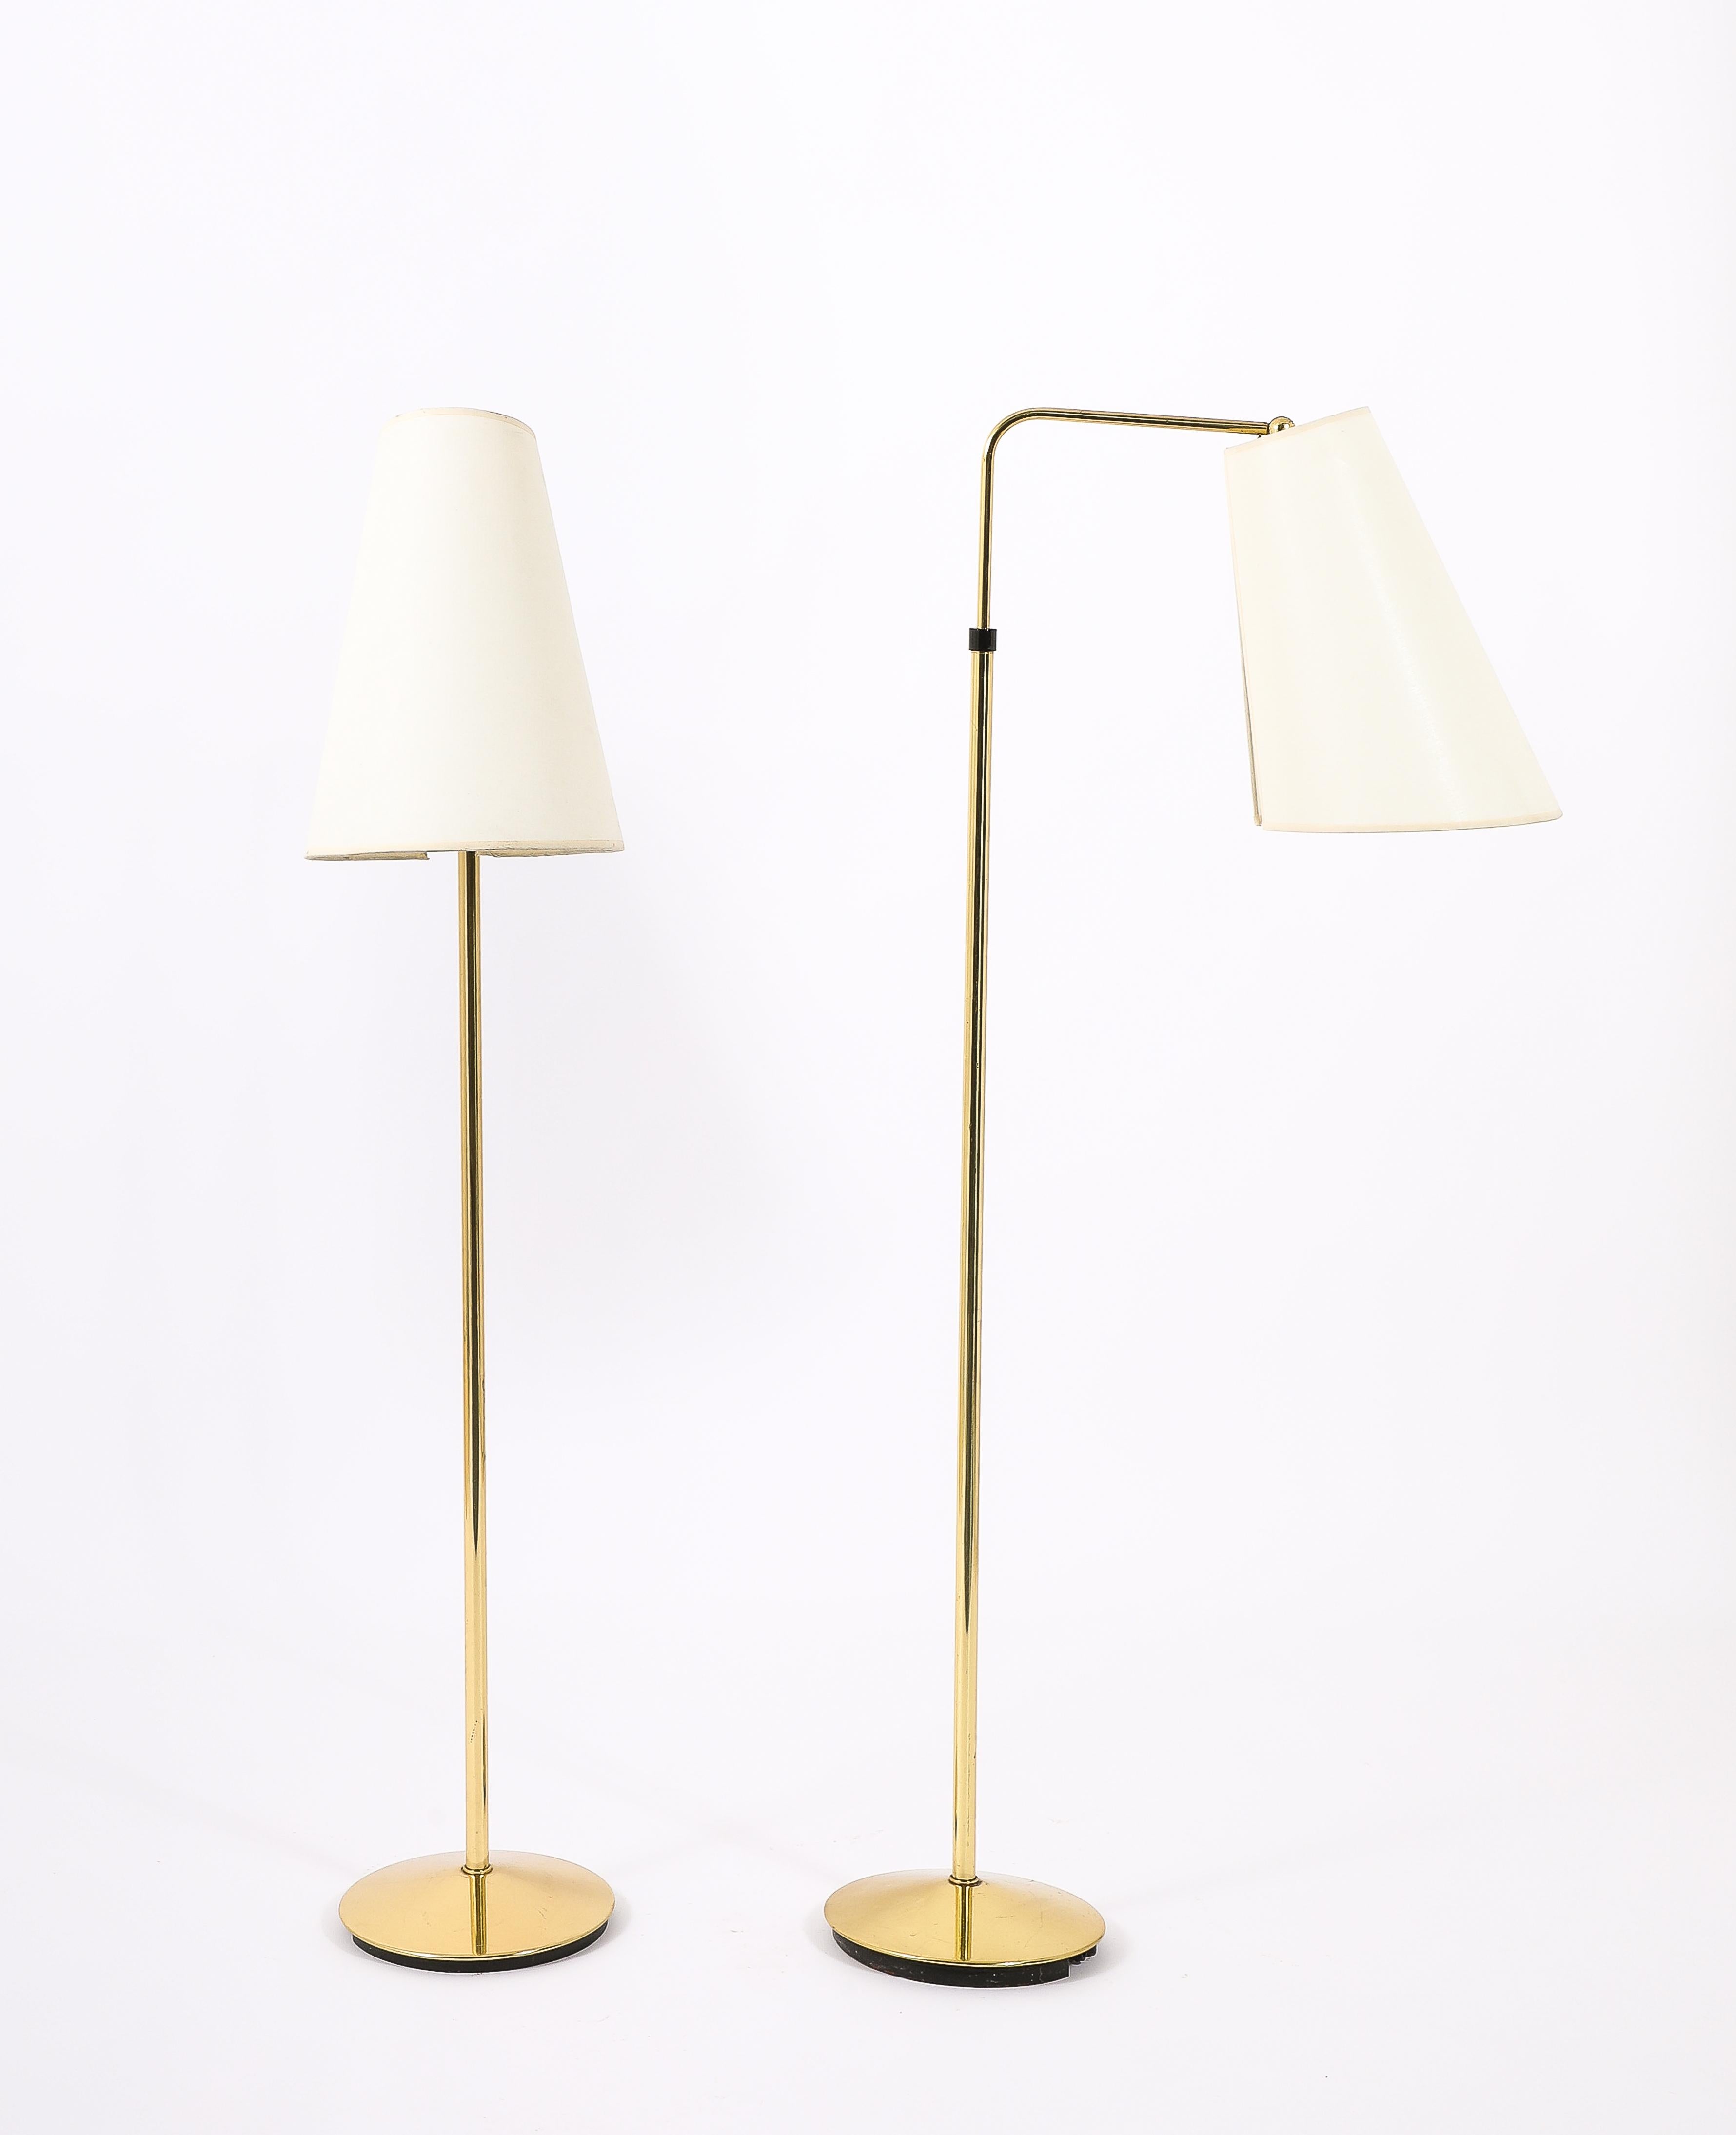 European Metalarte Brass Reading Floor Lamps, Spain 1960's For Sale